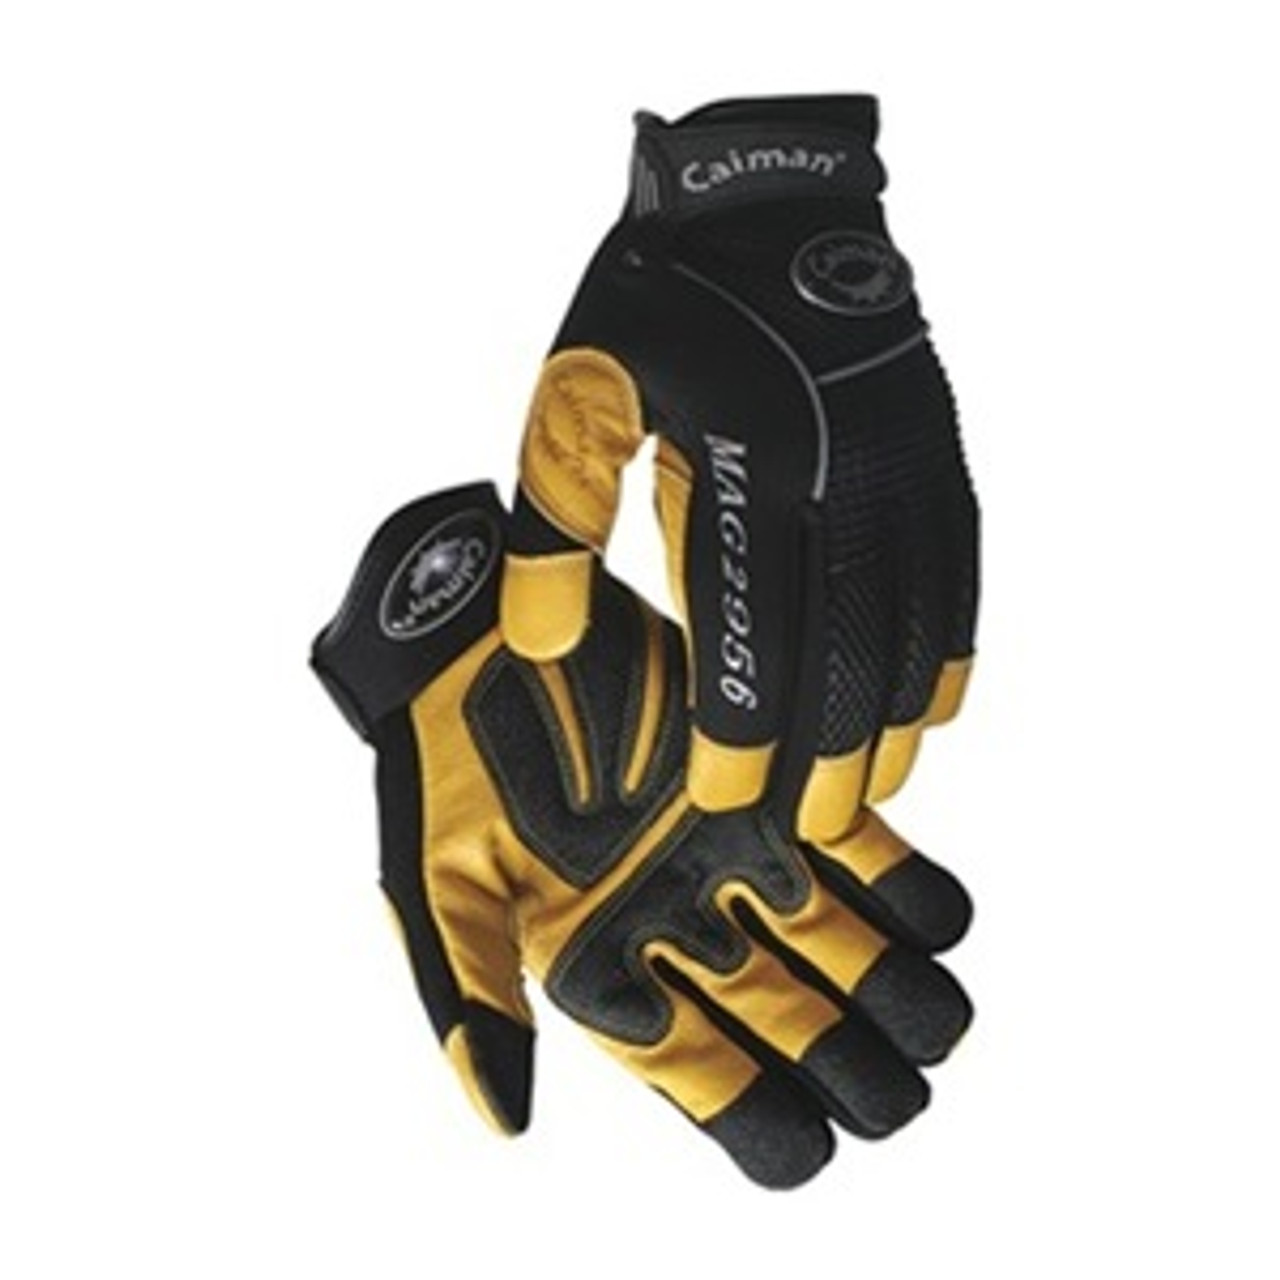 Caiman® Natural Pigskin Leather Mechanics Gloves  ##2956 ##